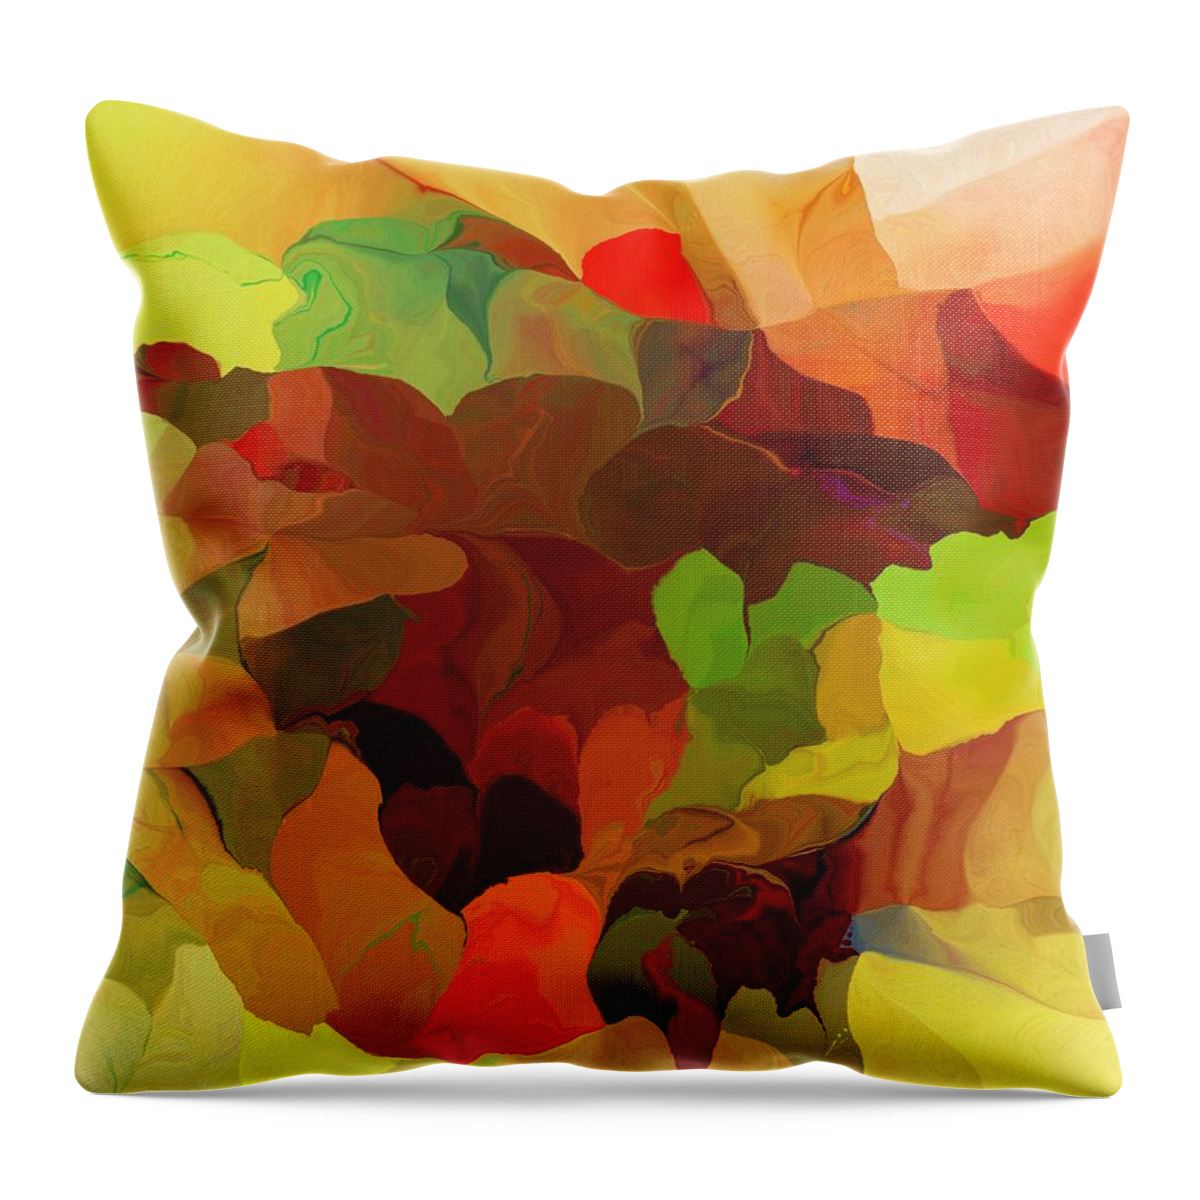 Fine Art Throw Pillow featuring the digital art Popago by David Lane